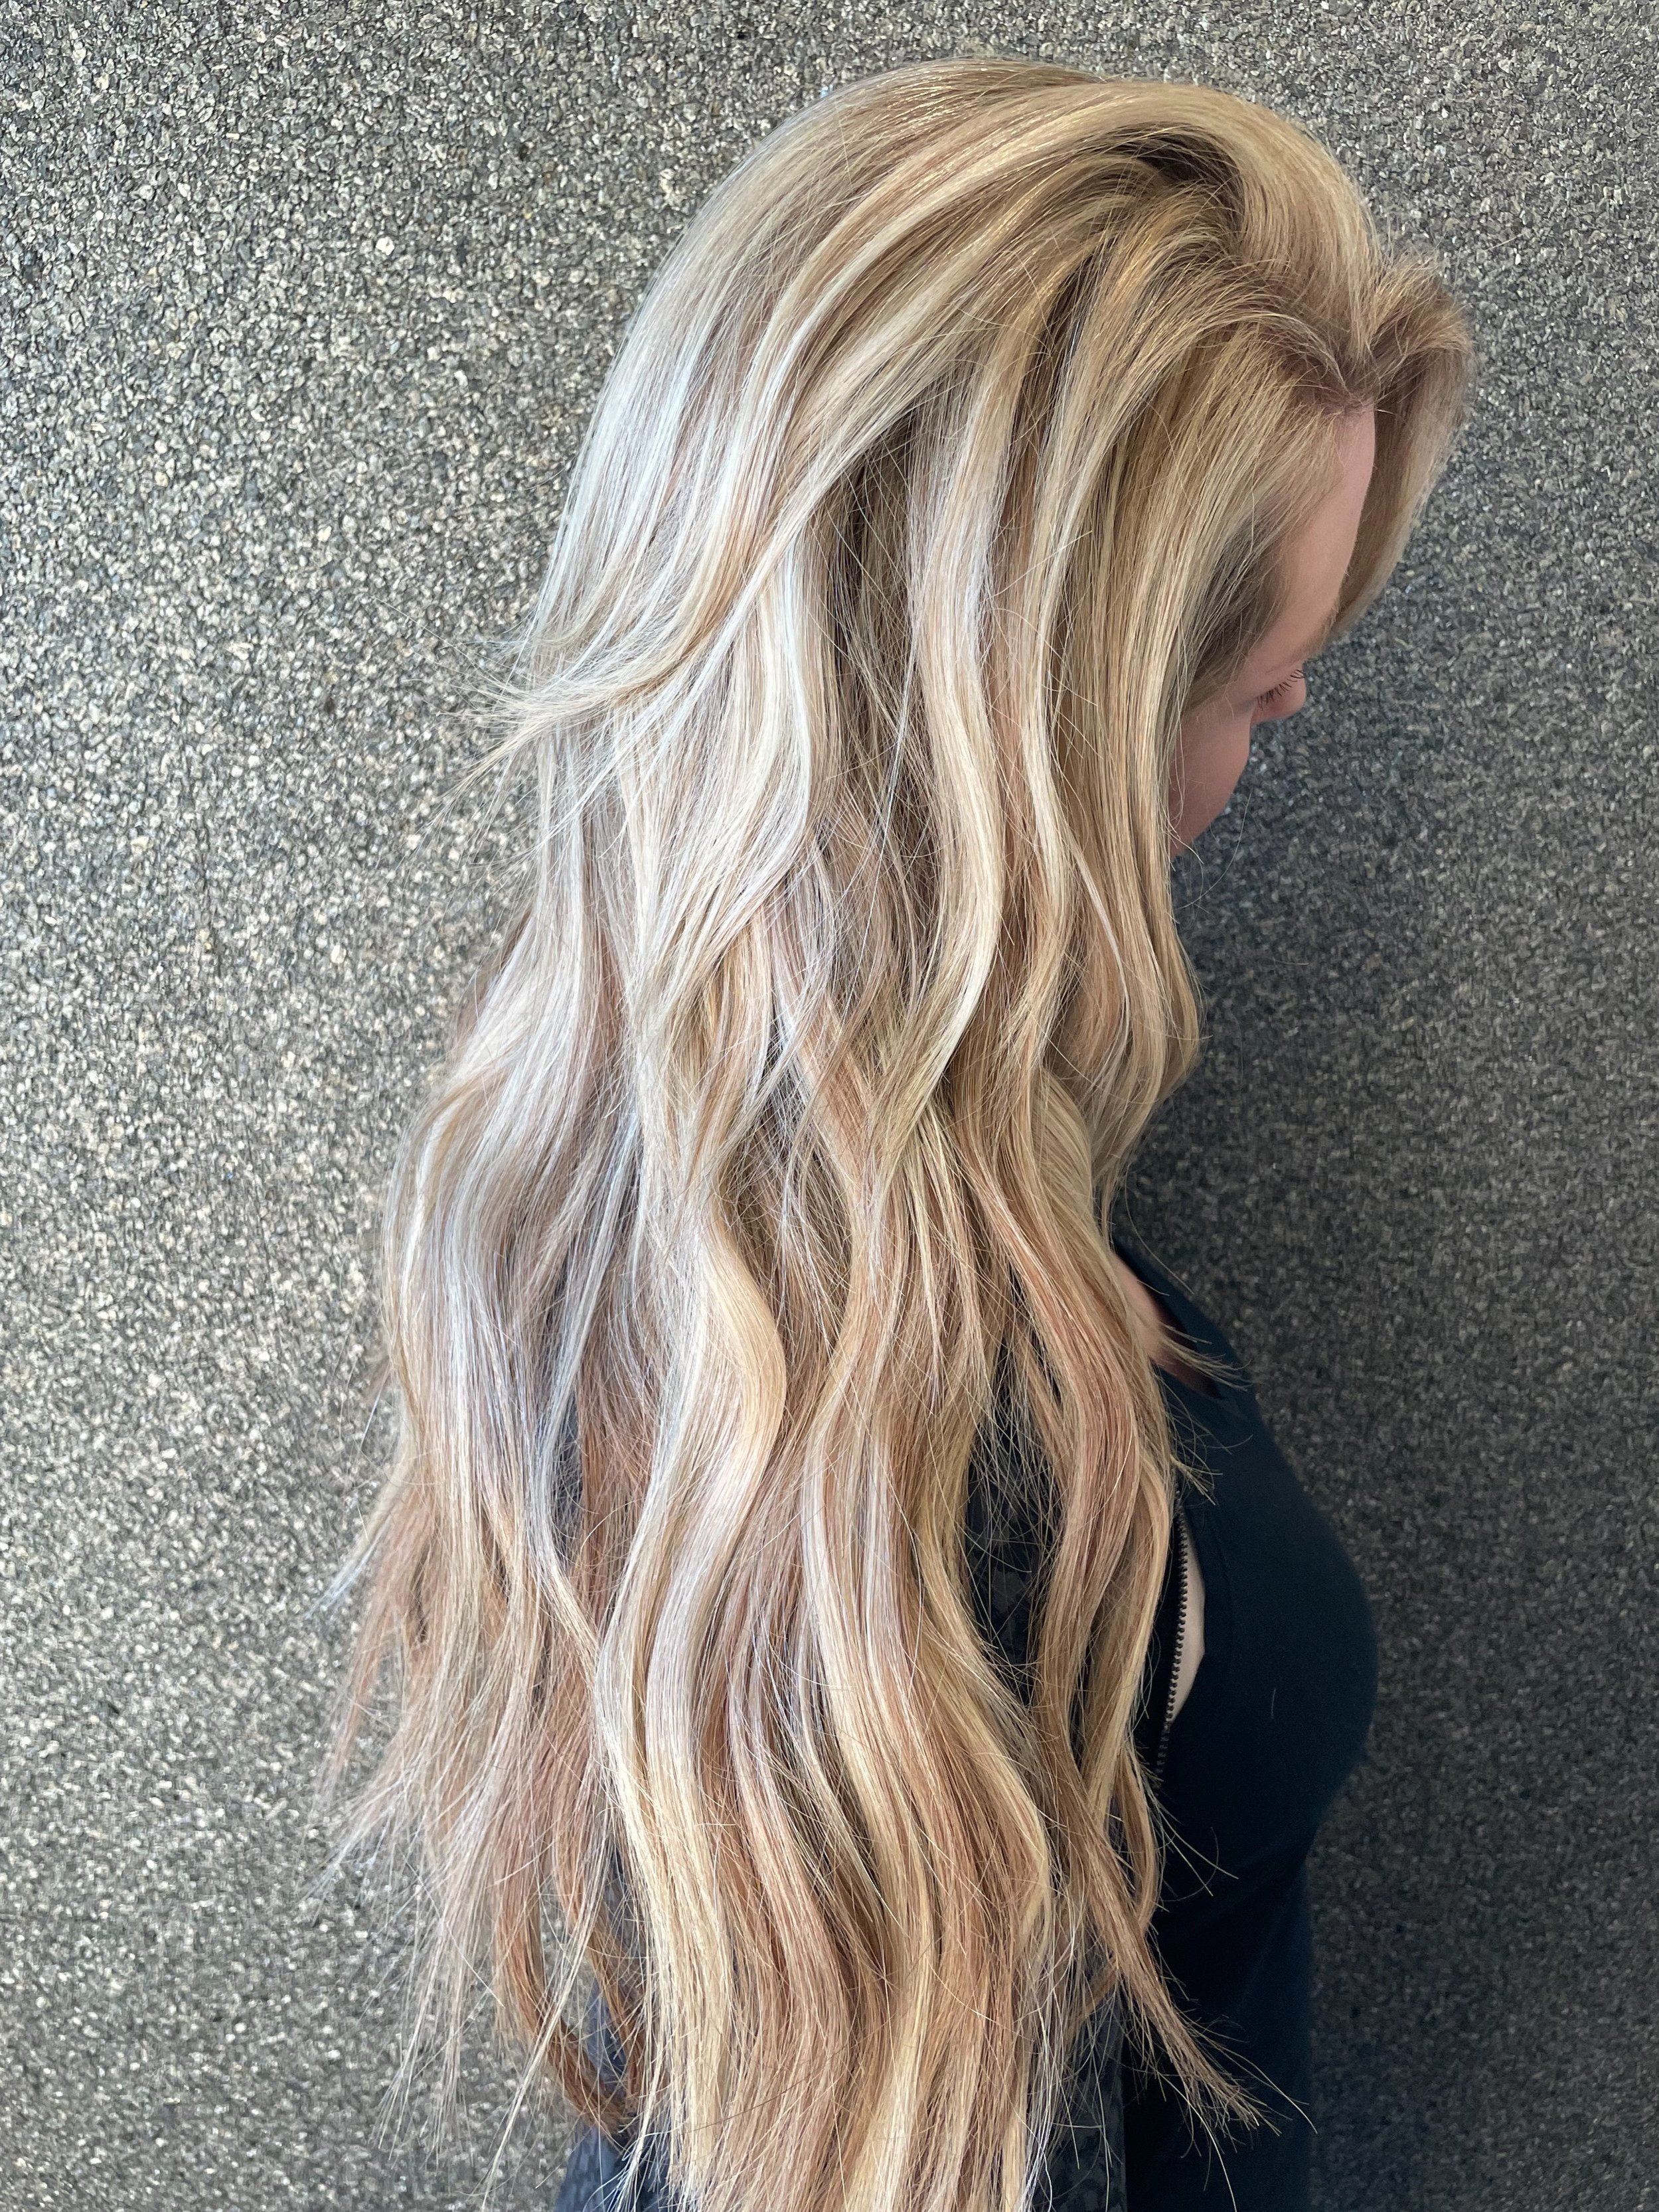 Long blonde highlighted hair by Samantha